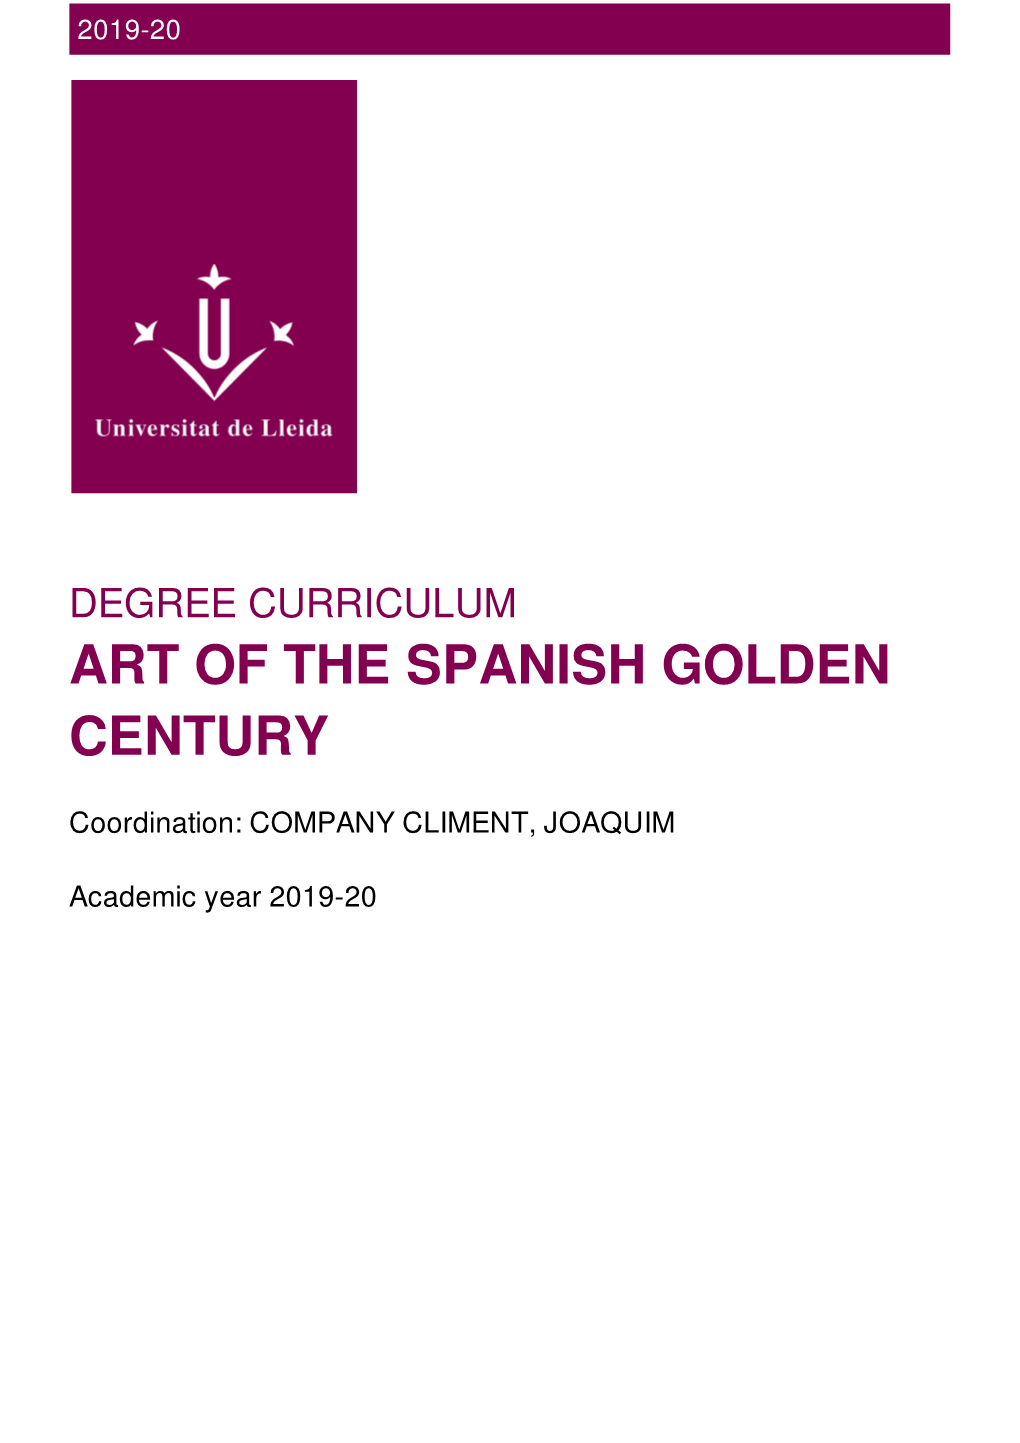 Art of the Spanish Golden Century